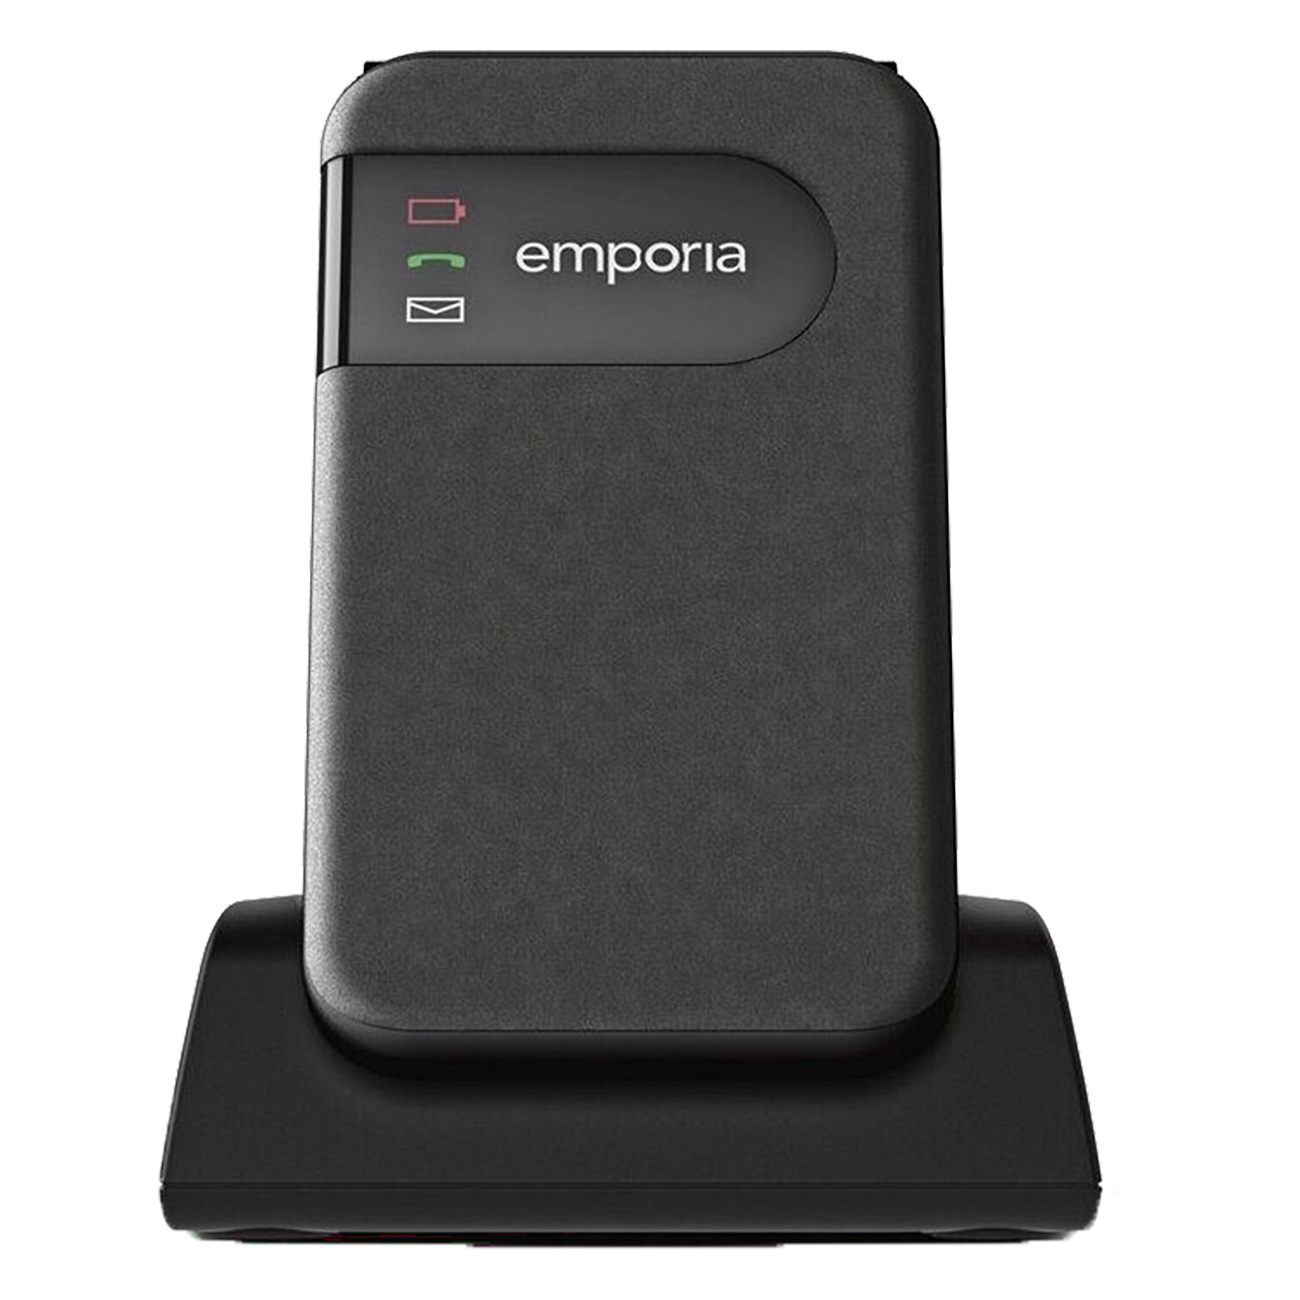 Emporia SIMPLICITY glam wei? | Mobiltelefon | 1300 mAh | 64 MB | Bluetooth 3.0 | 2G 900/1800 MHz | Single Nano SIM | Freisprechen | Vibrationsalarm von Emporia